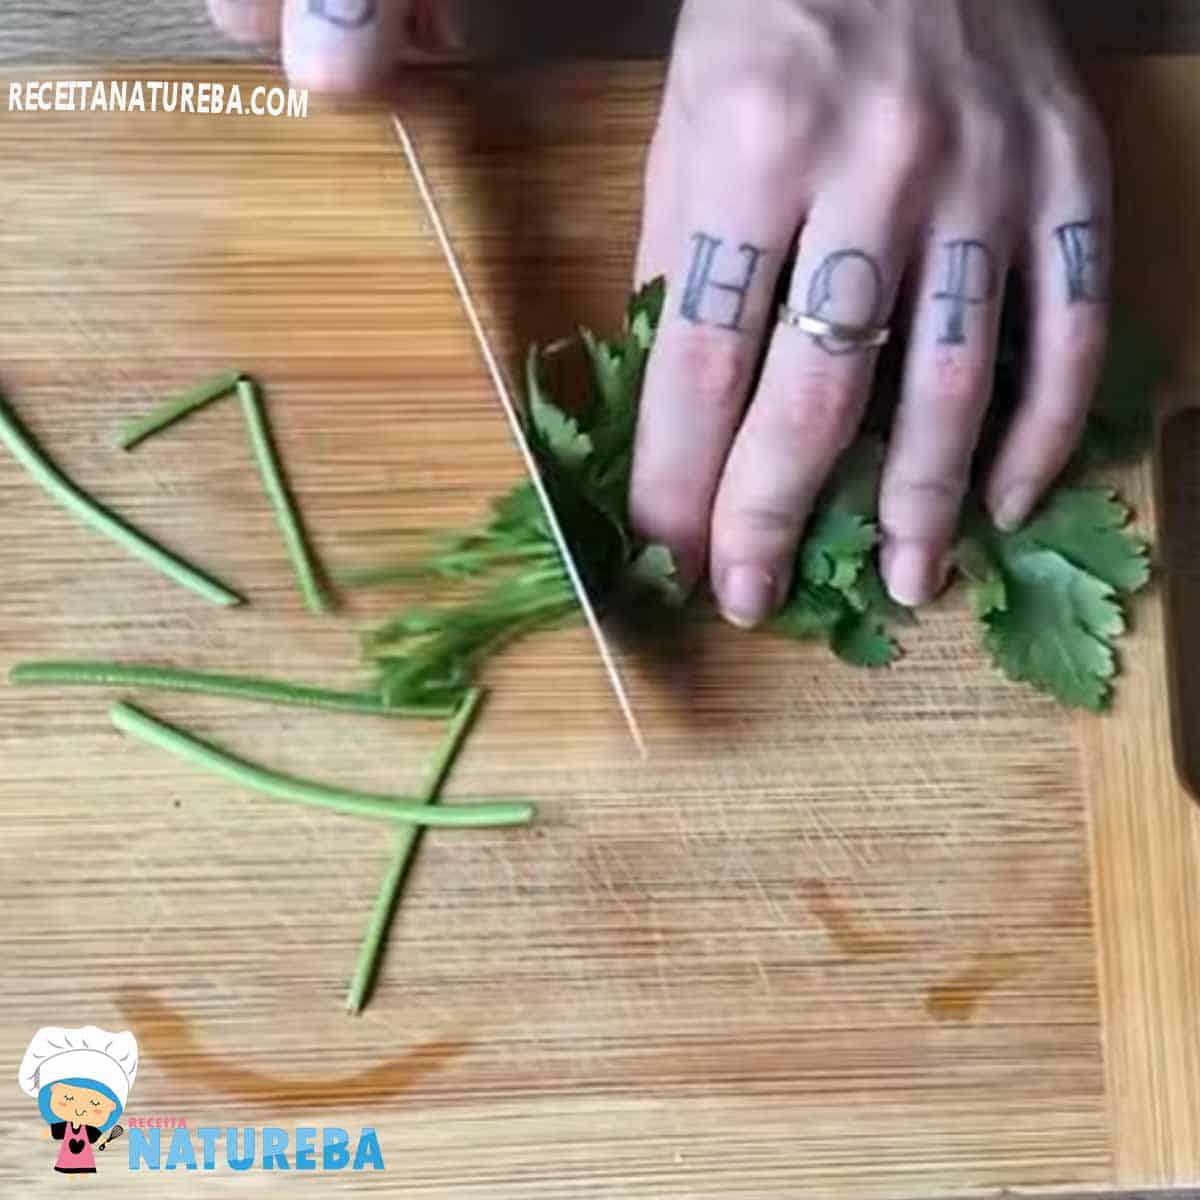 cortando a salsinha